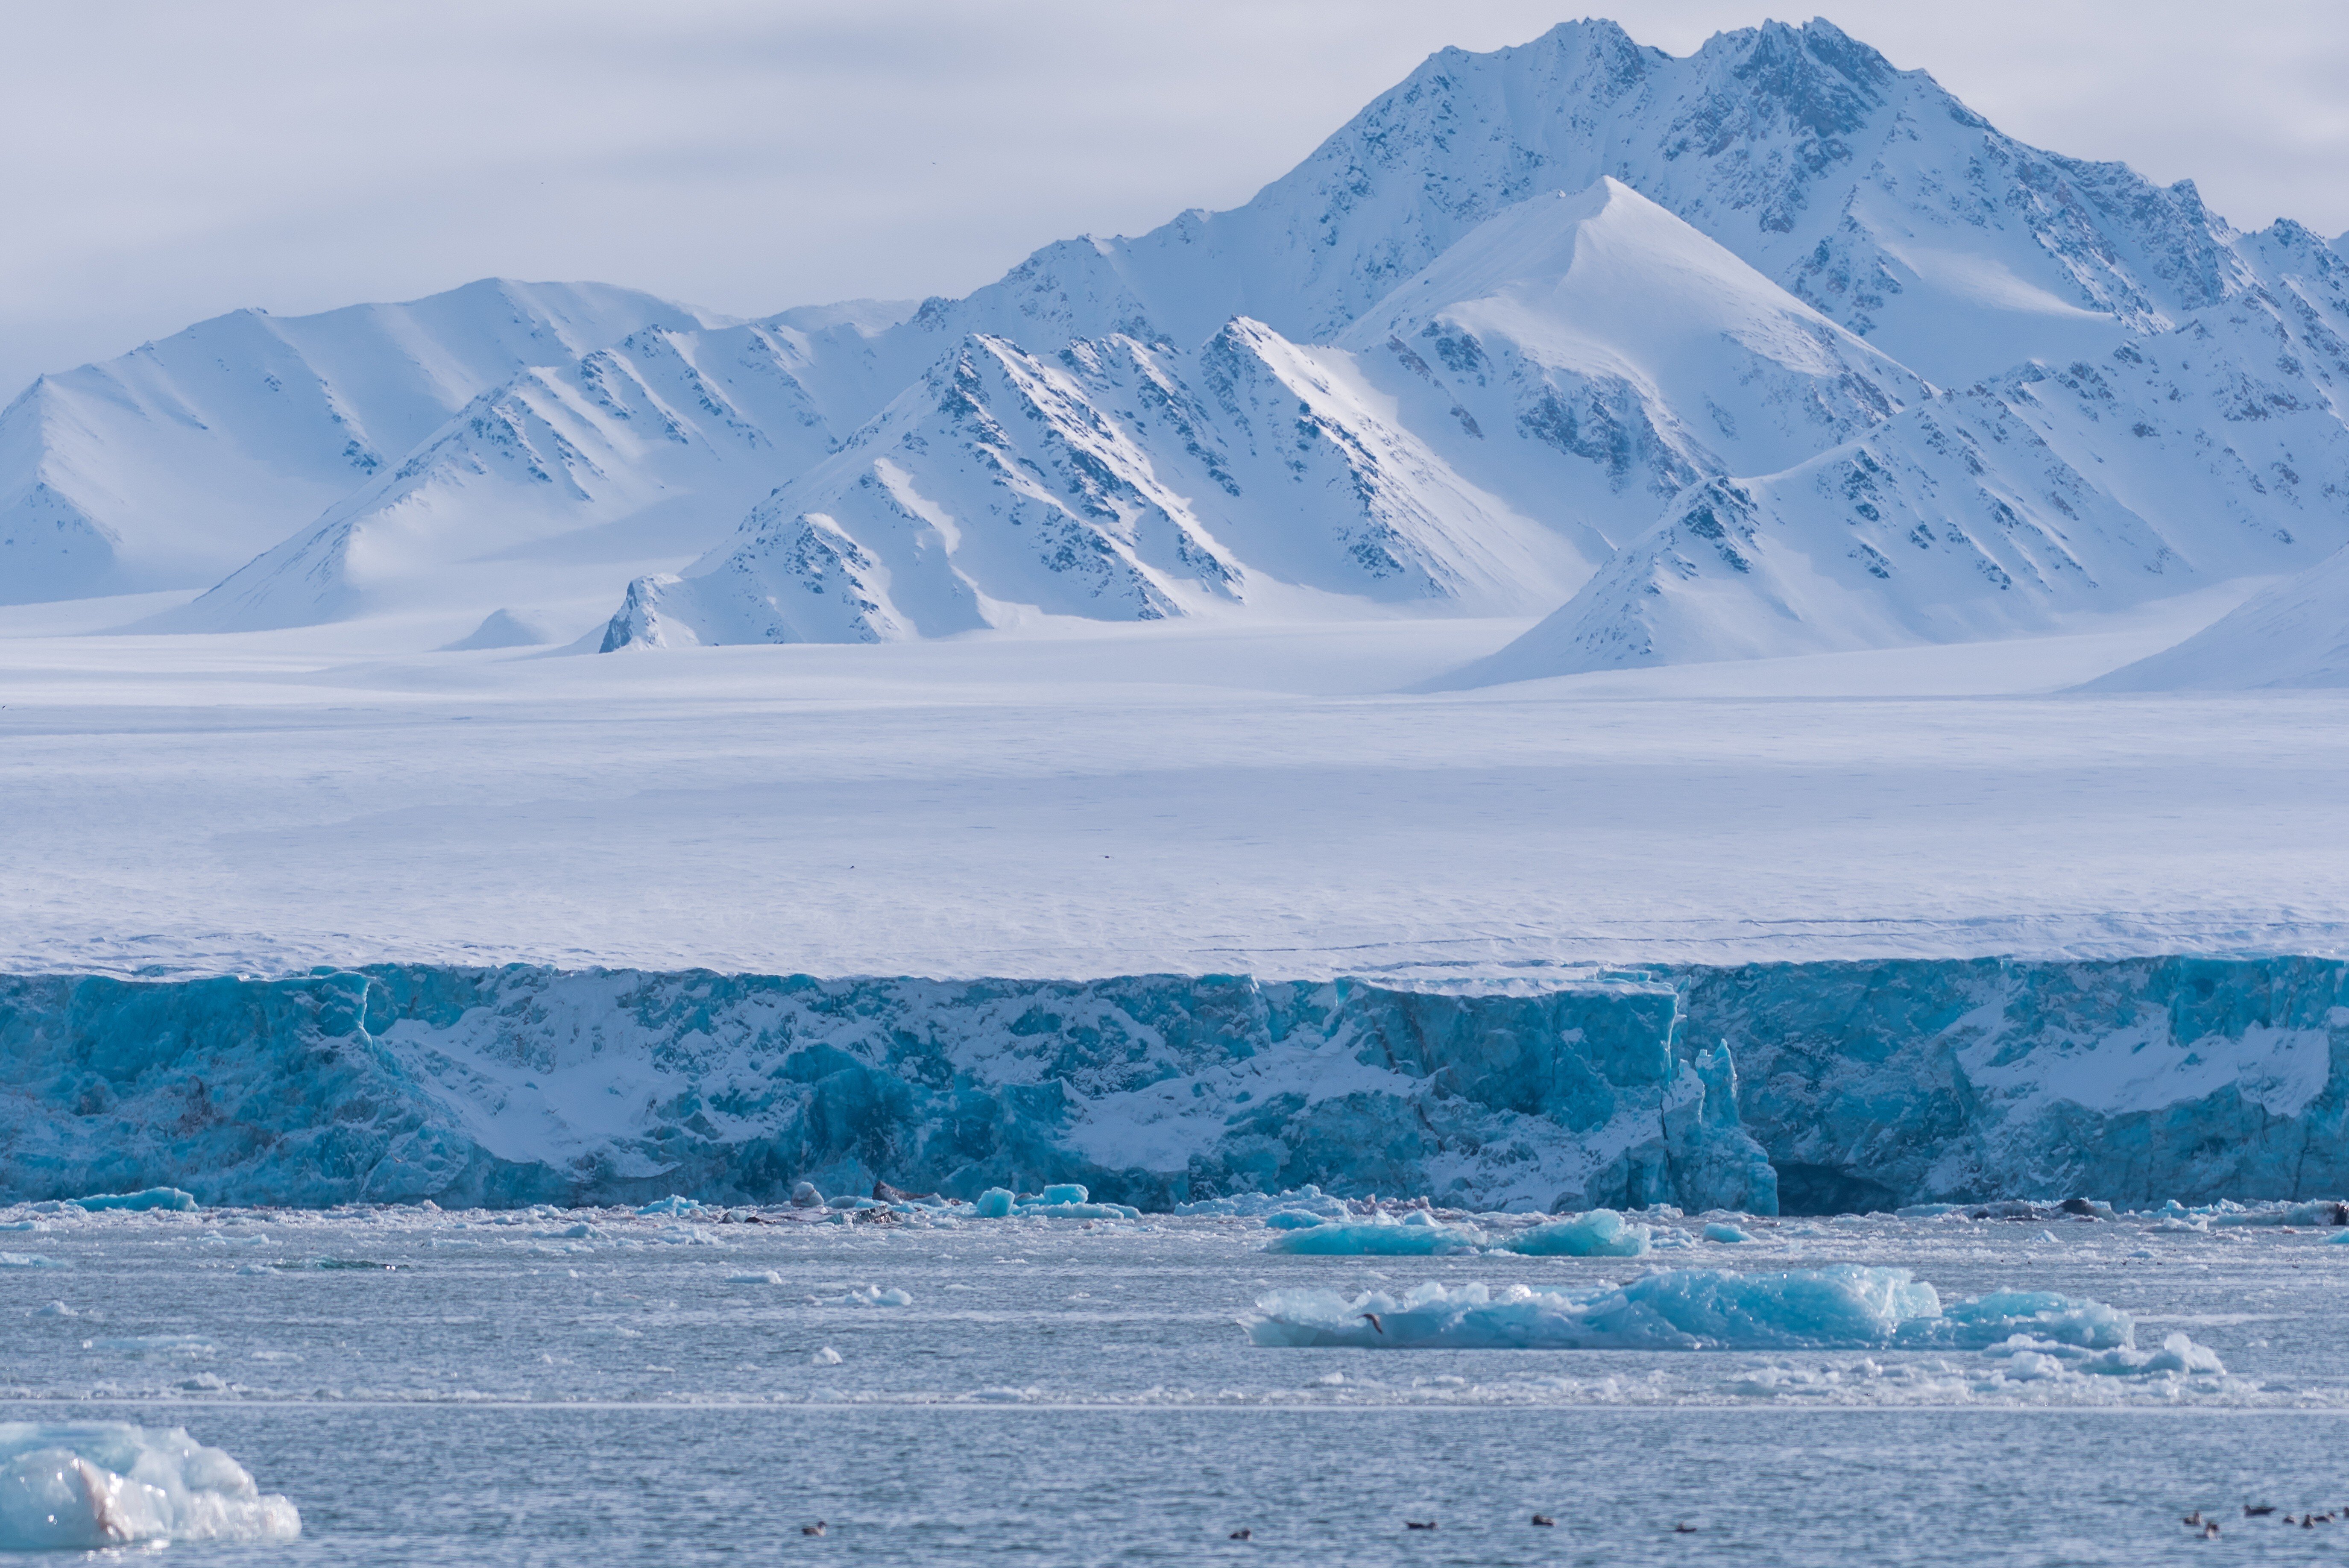 Лед 2 океан. Морена ледника Шпицберген. Северный полюс Арктика. Арктика пейзаж. Льды Северного Ледовитого океана.